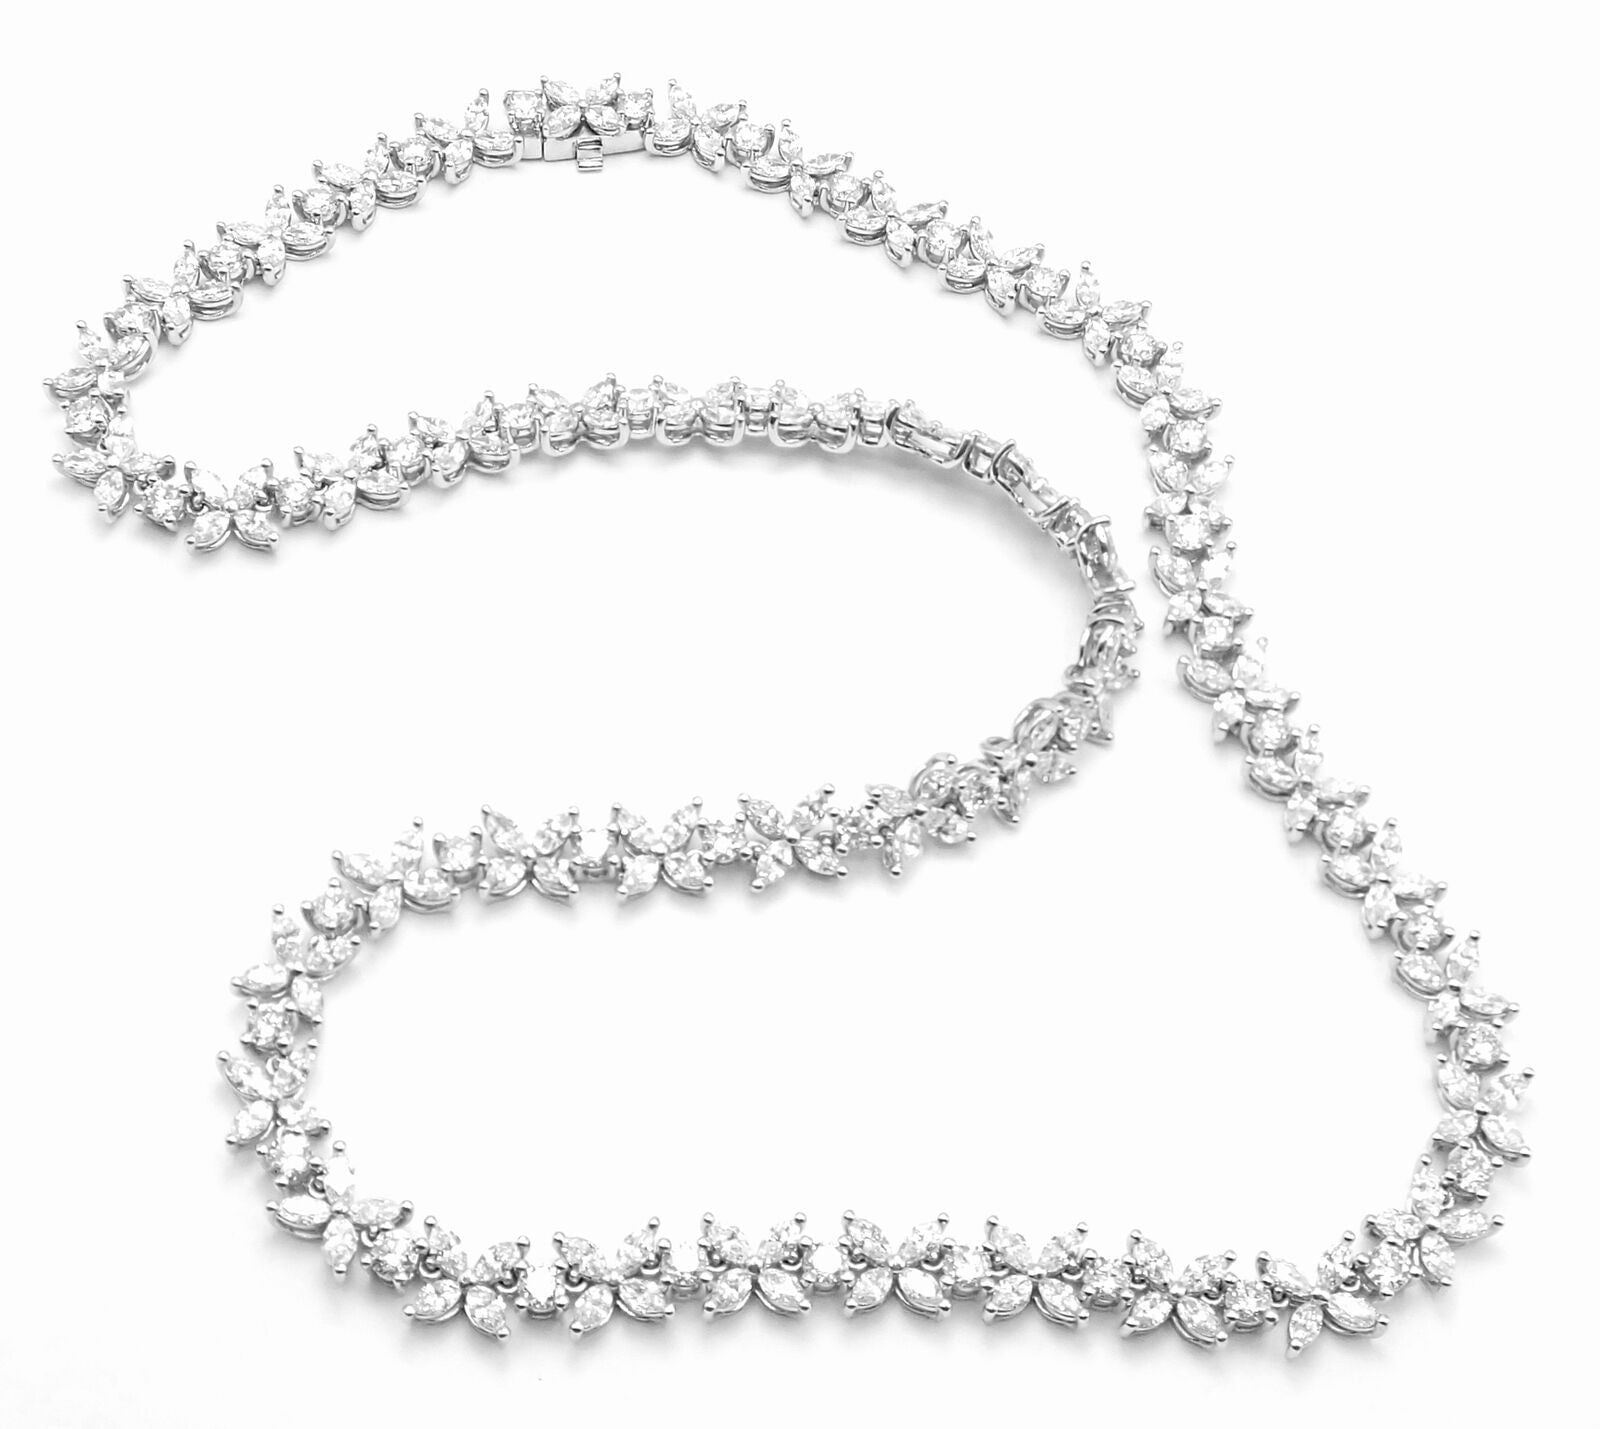 Tiffany Victoria® graduated line necklace in platinum with diamonds.